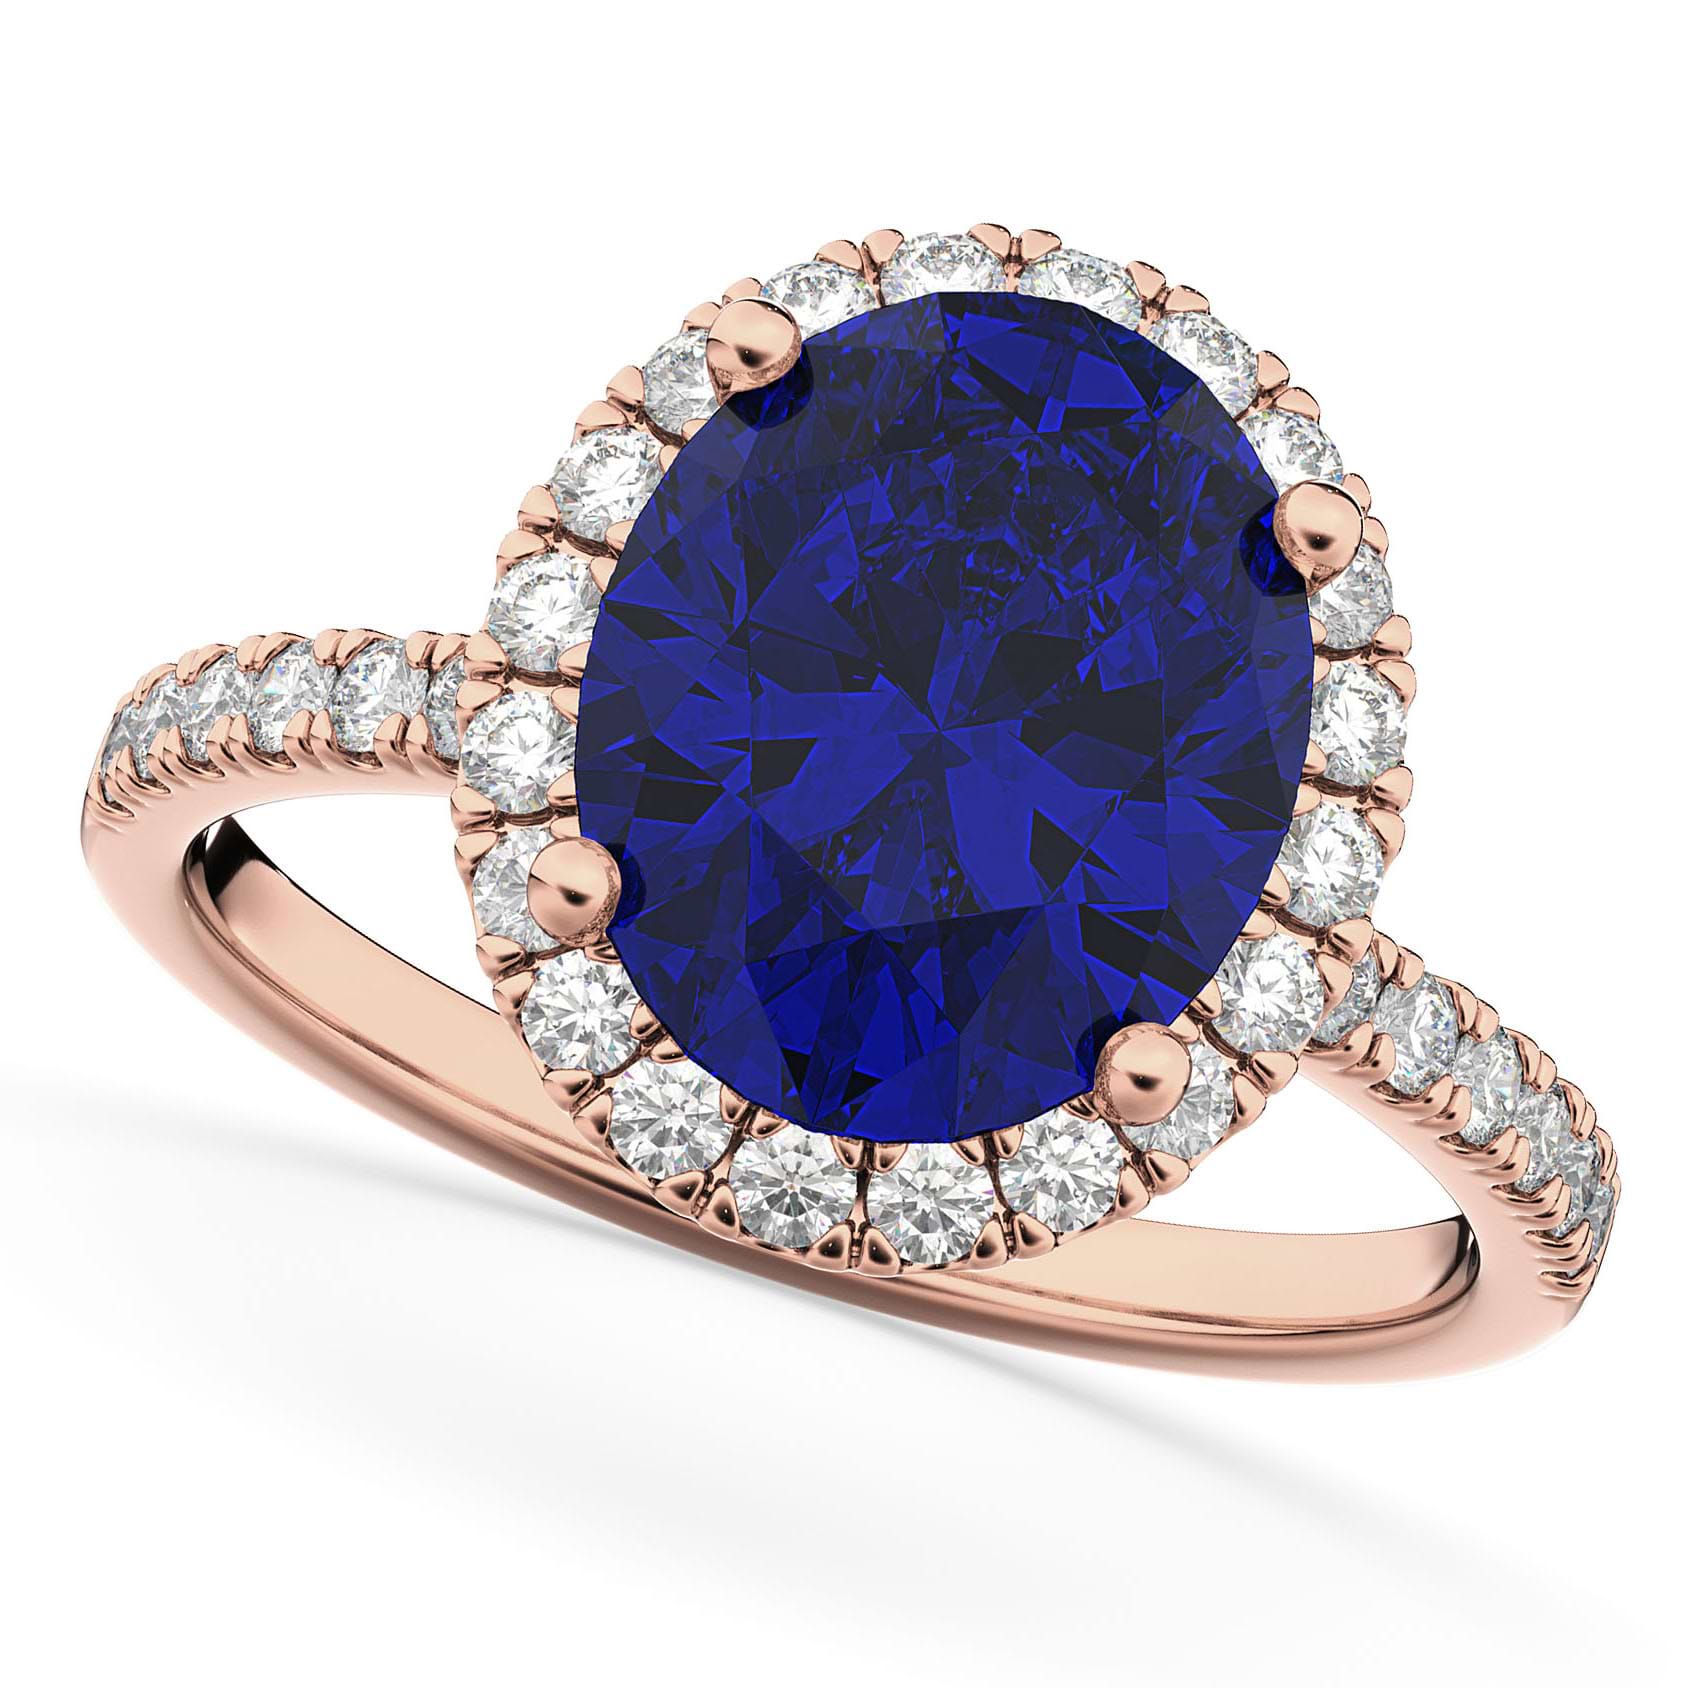 Perfect Oval Cut Blue Sapphire With CZ Accents Unique Engagement Men's Cufflinks 